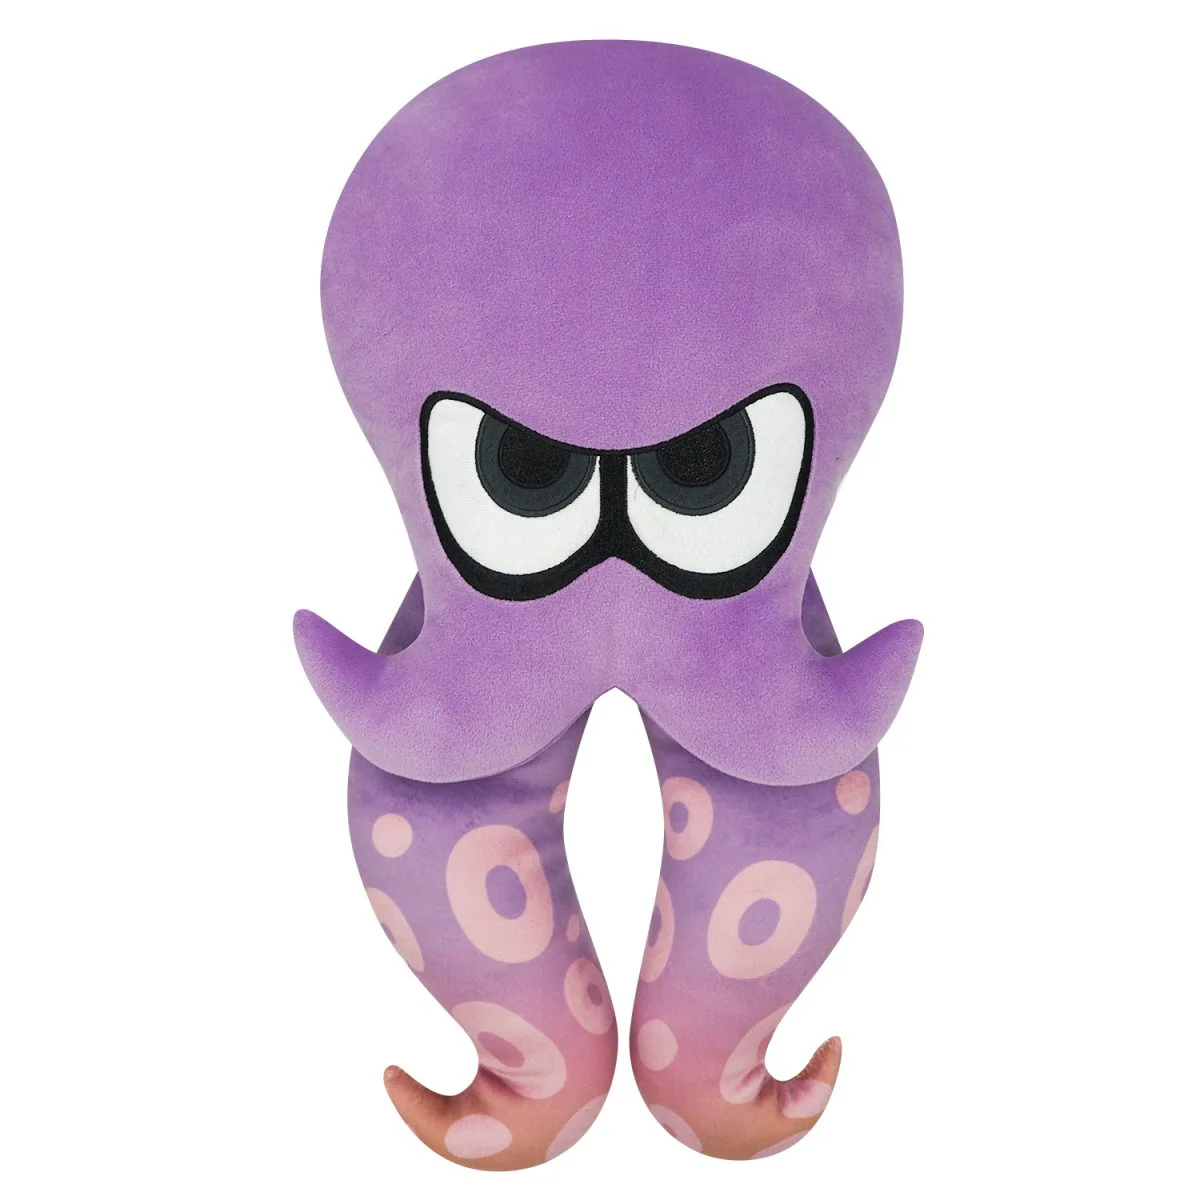 Little Buddy - 16" Purple Octoling Octopus Plush (G.Flr)